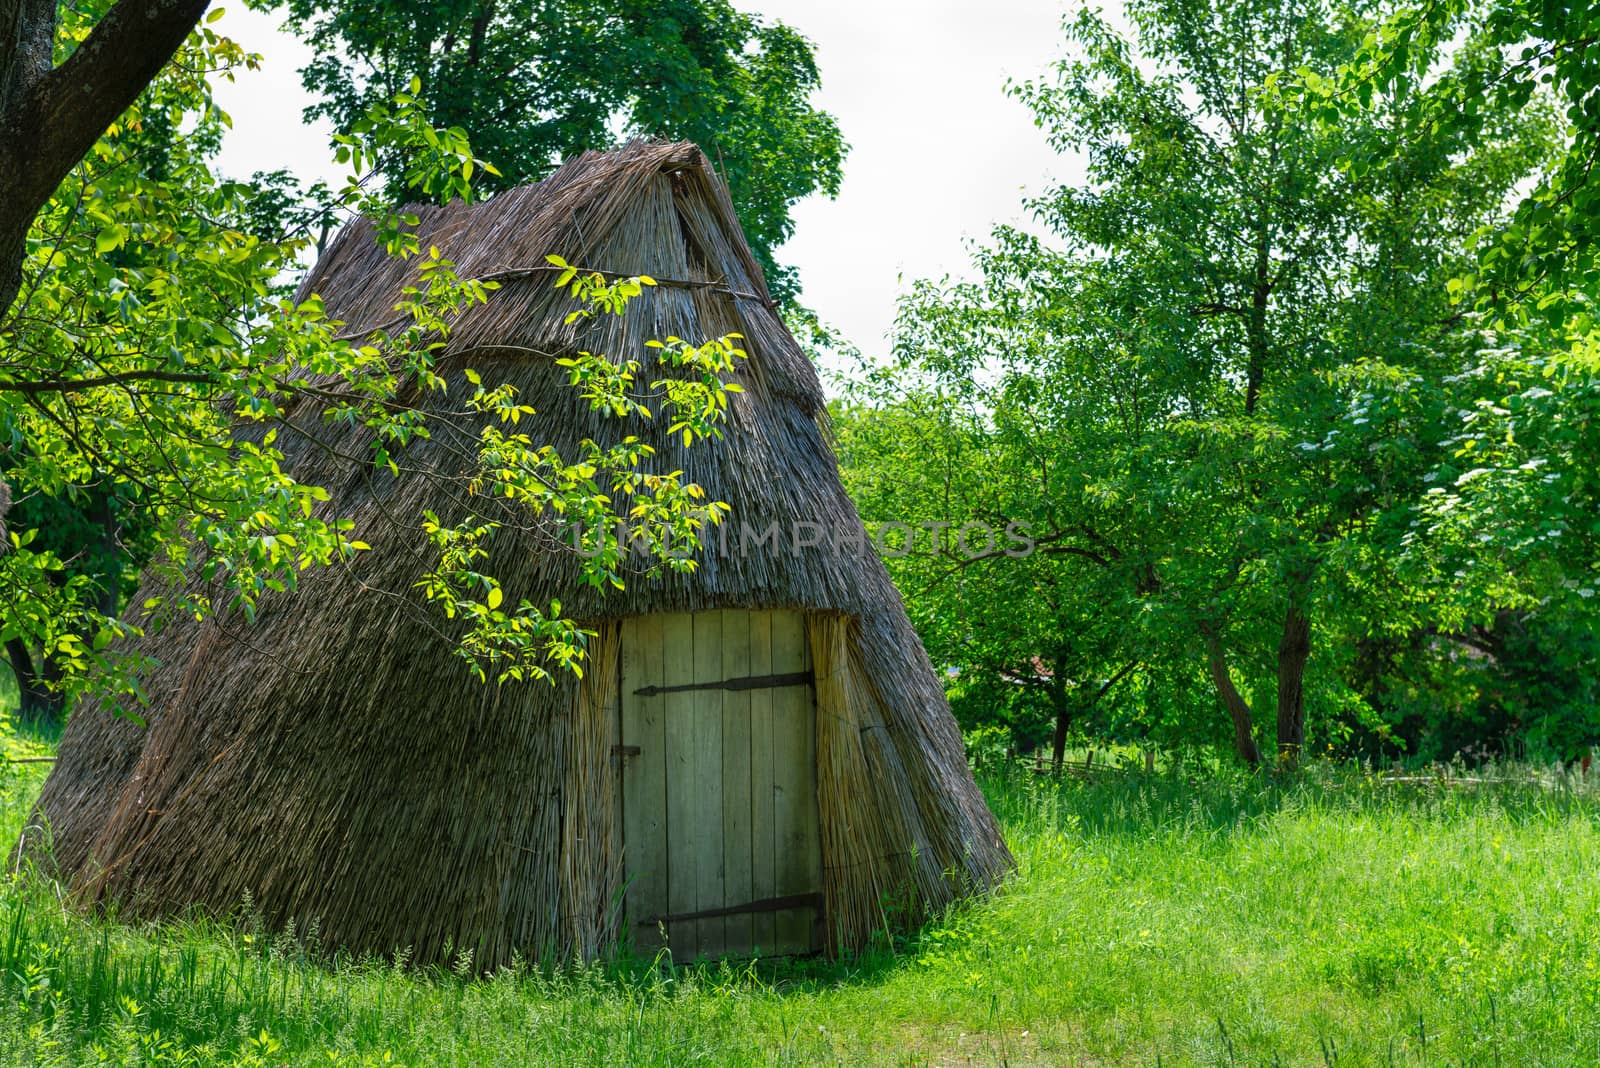 Wooden village storehouse by iryna_rasko